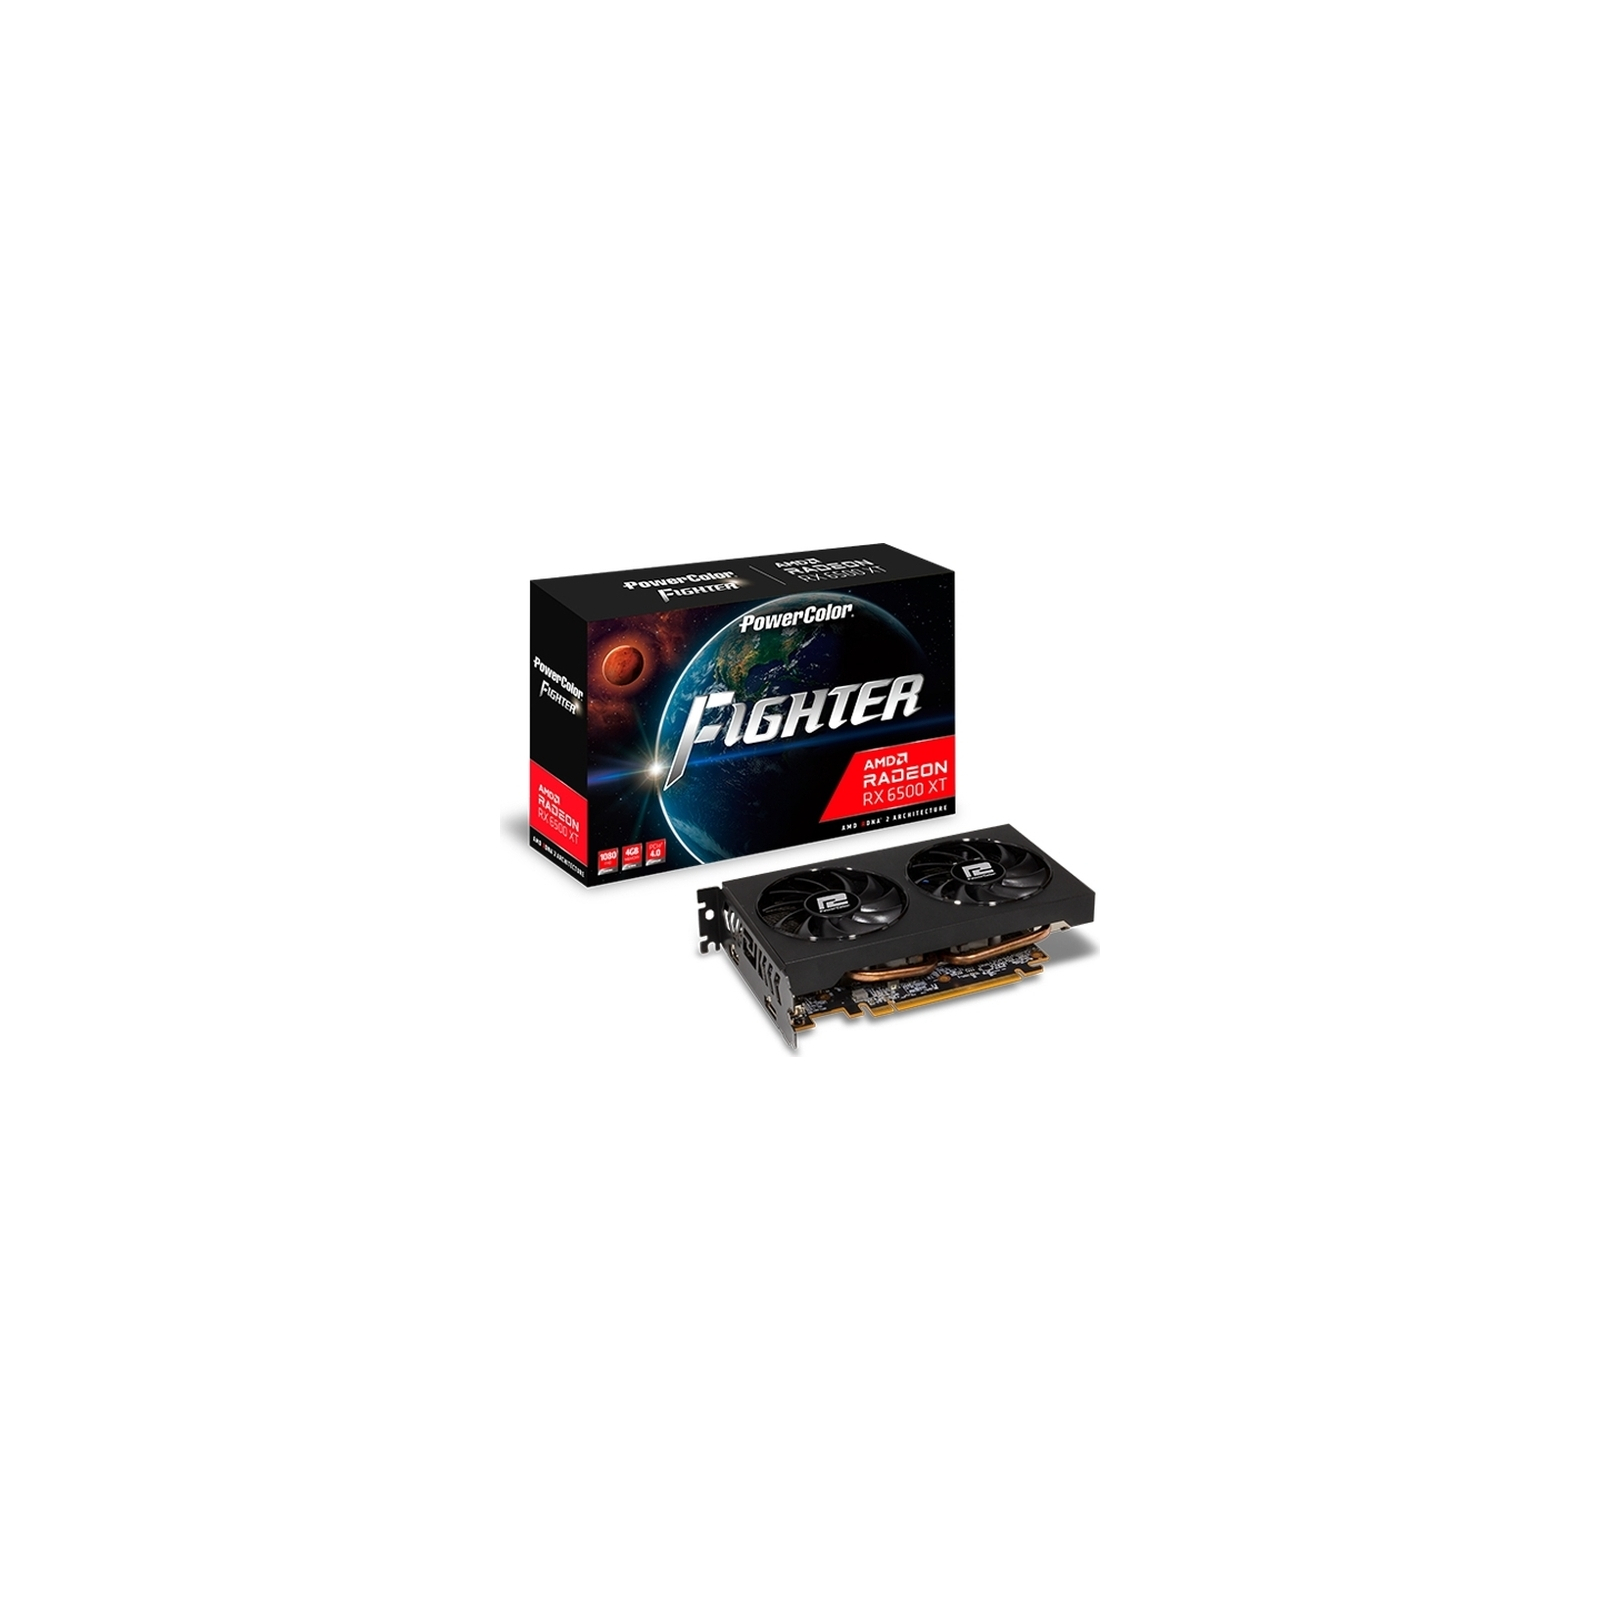 Видеокарта PowerColor Radeon RX 6500 XT 4Gb Fighter (AXRX 6500 XT 4GBD6-DH/OC) изображение 6